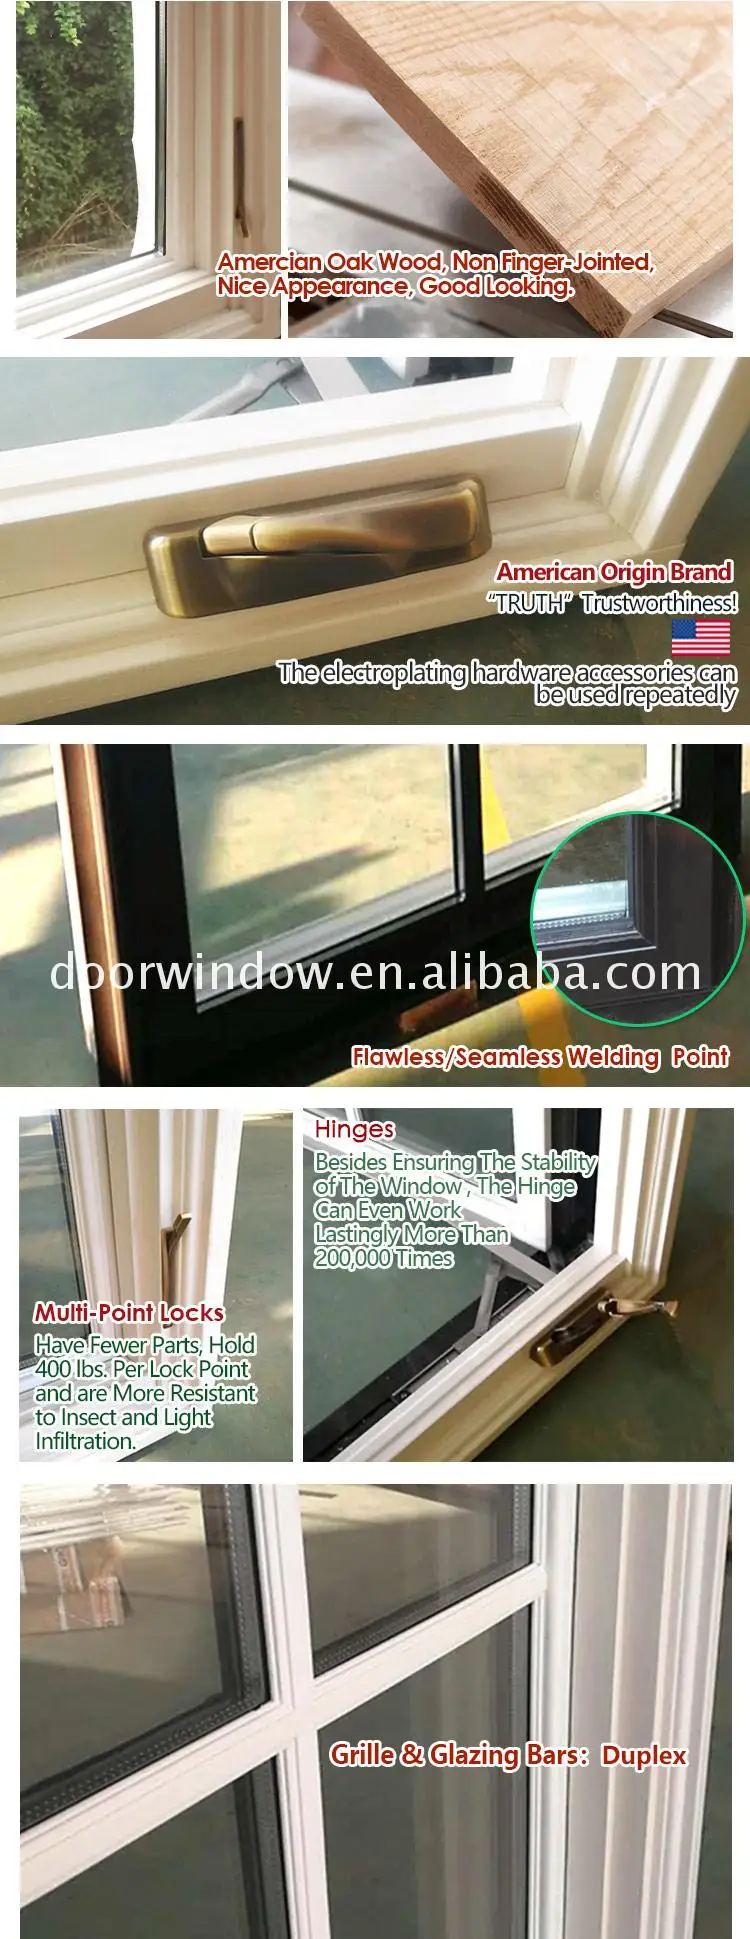 China Manufactory aluminium windows specials aama window ratings 36 inch round